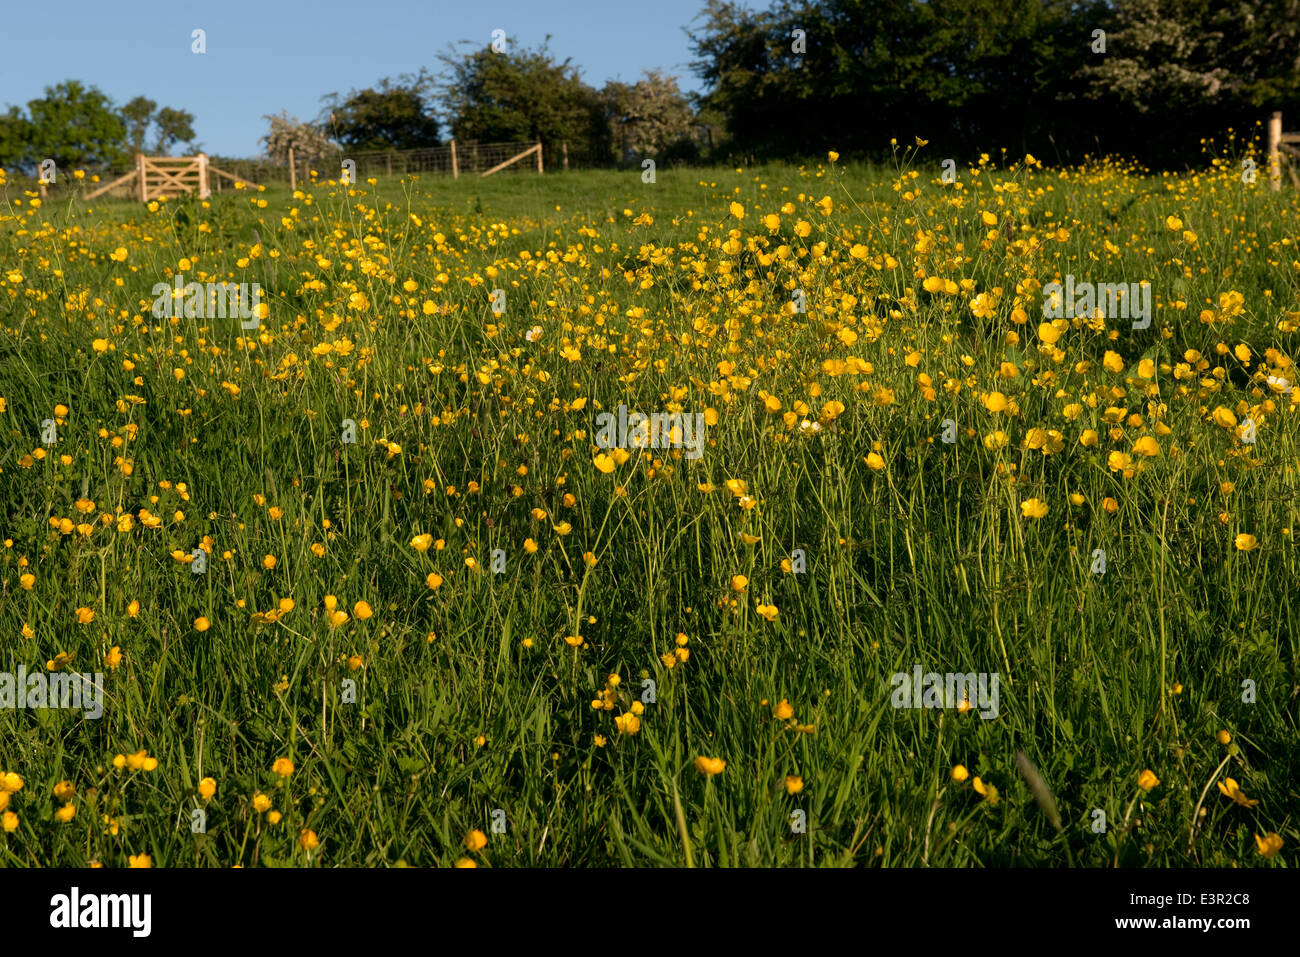 Field buttercups or tall buttercups, Ranunculus acris, flowering in a meadow lit by warm evening light Stock Photo